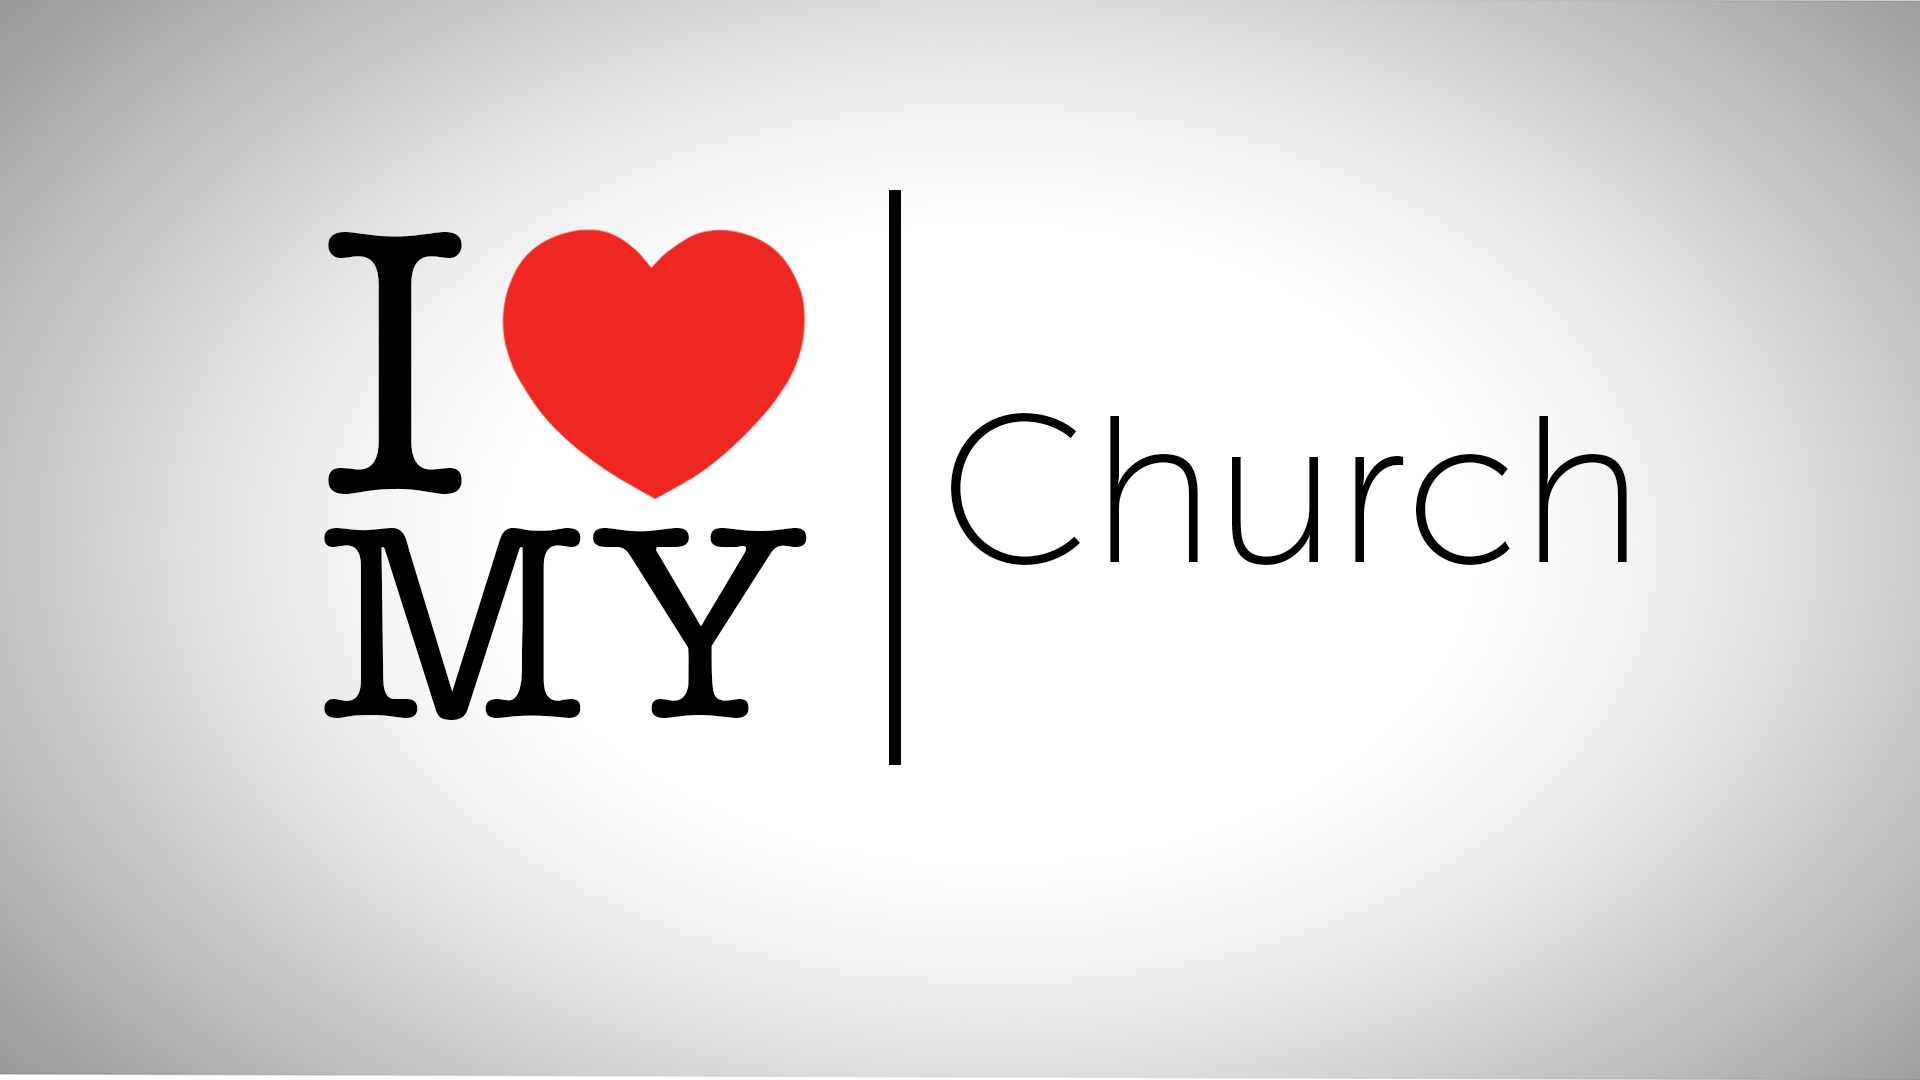 I love my church: I get to sacrifice